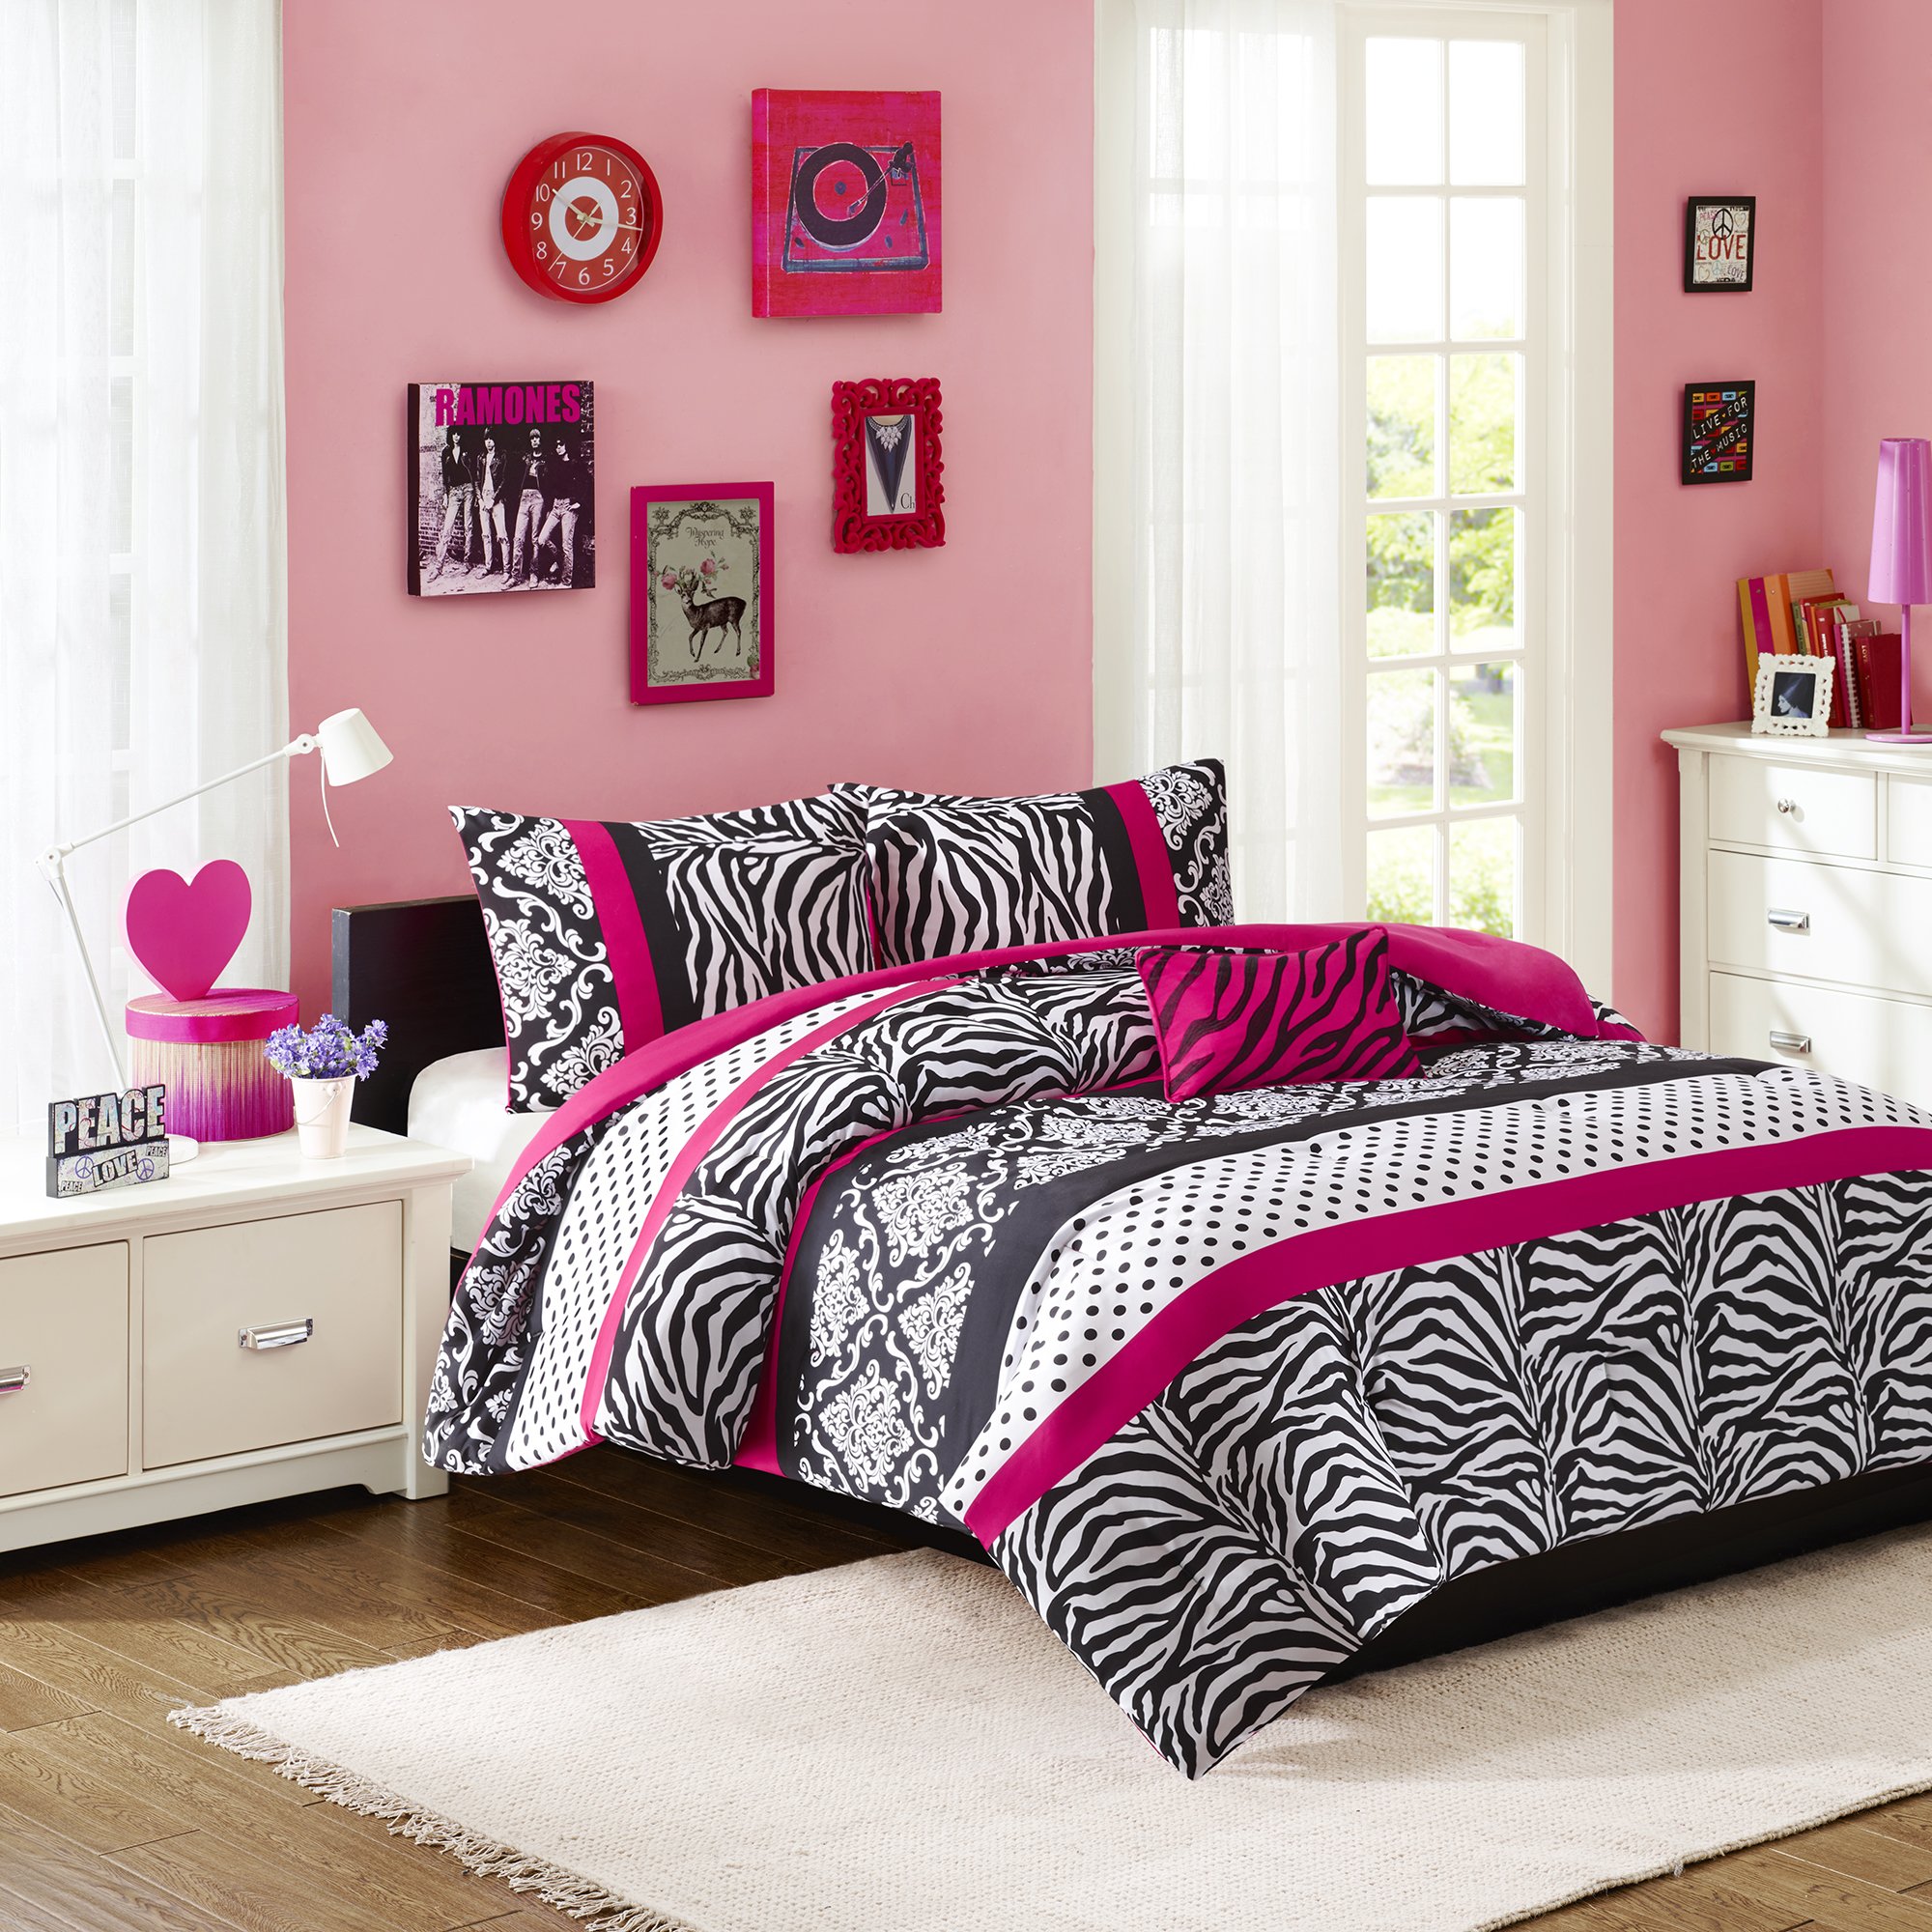 Book Cover Mi Zone Reagan Comforter Set King/Cal King Size - Pink , Zebra Polka Dot â€“ 4 Piece Bed Sets â€“ Ultra Soft Microfiber Teen Bedding For Girls Bedroom